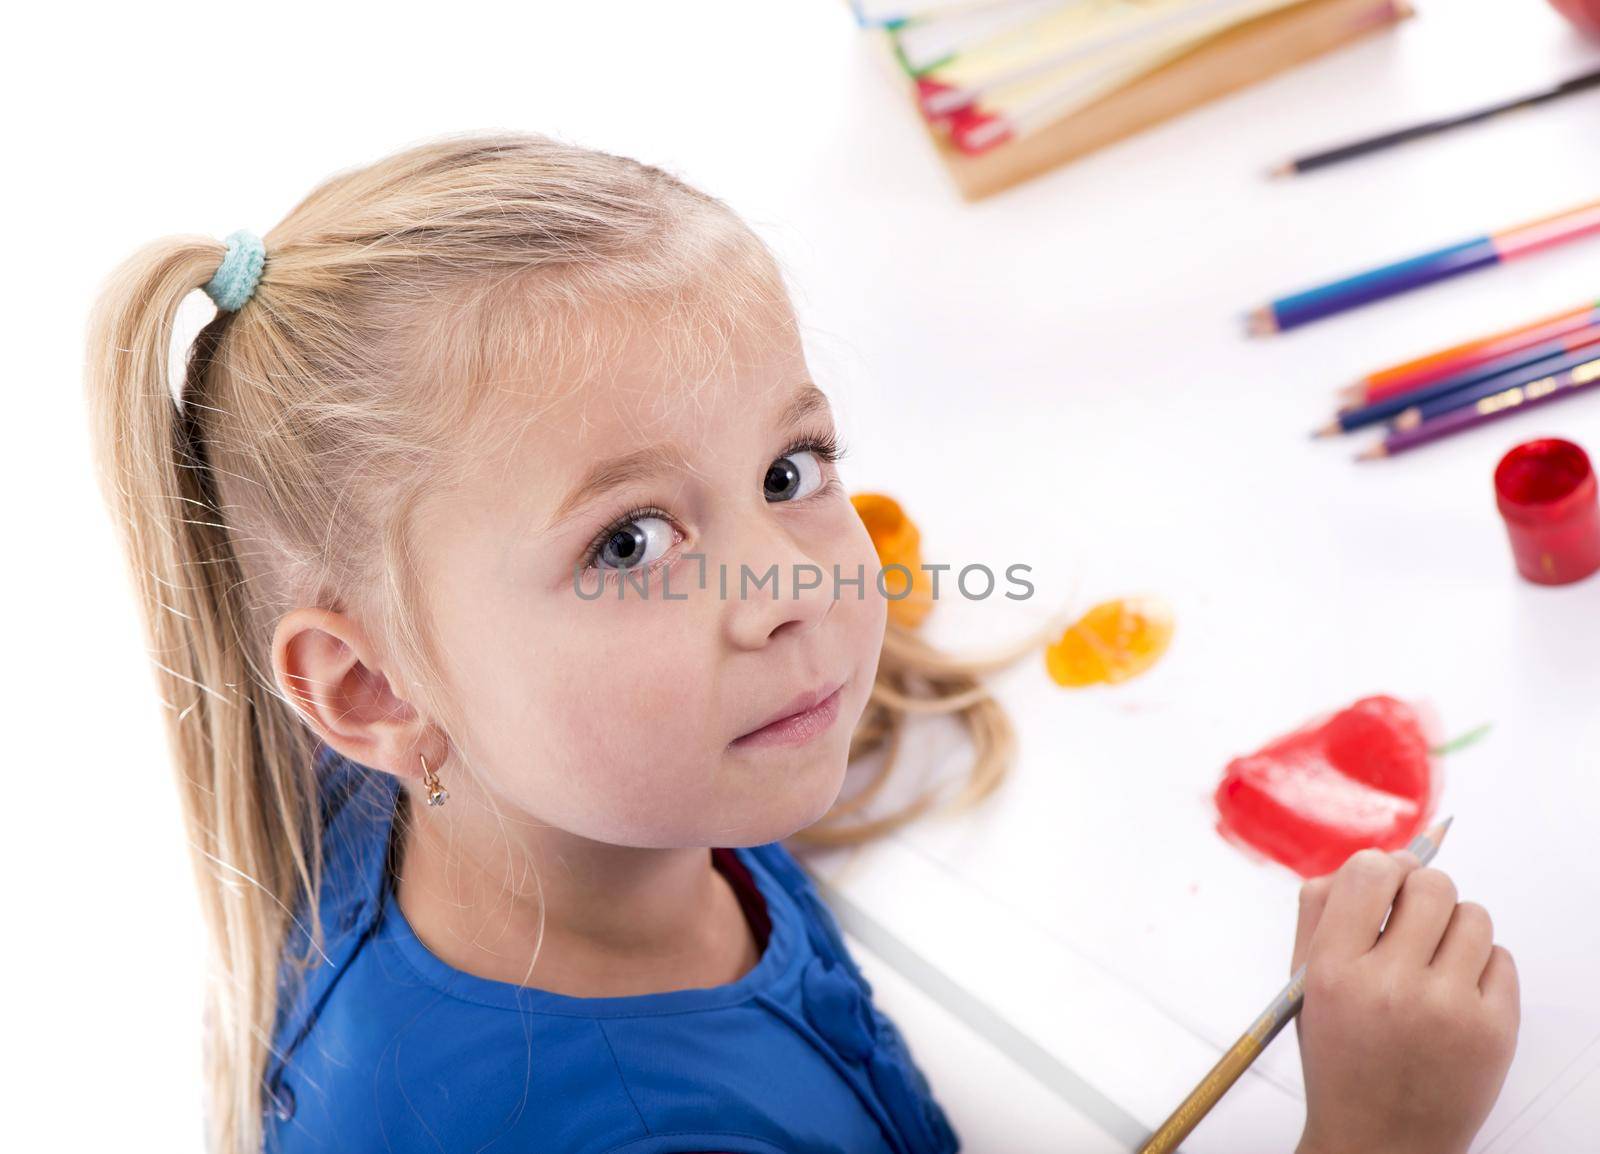 artist kid girl painting over white background